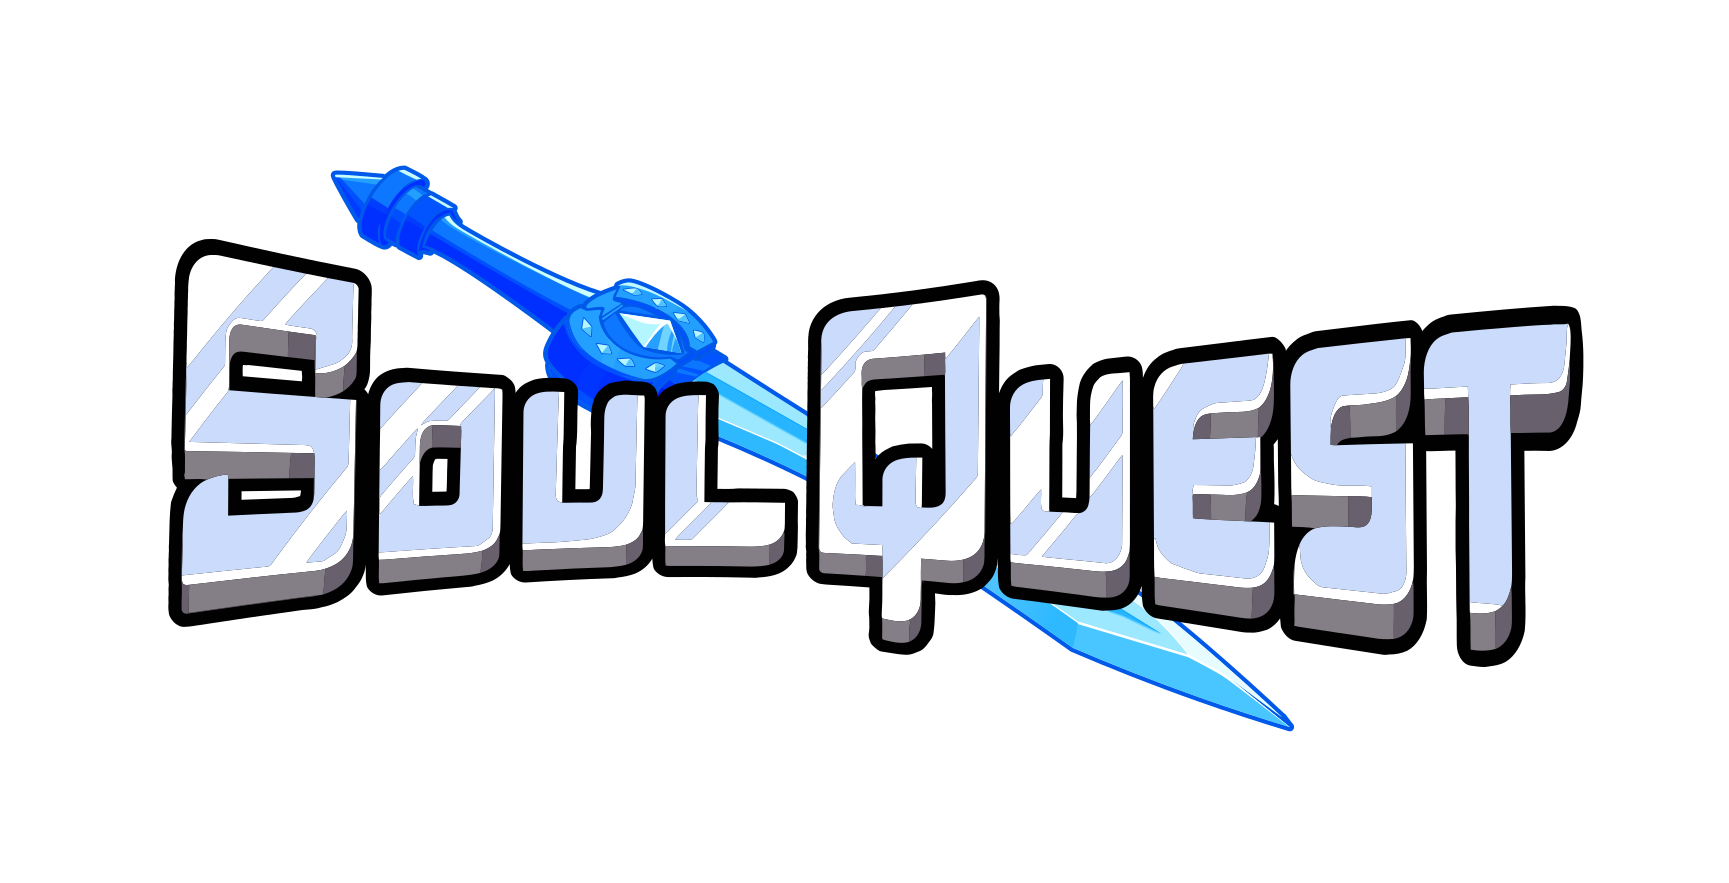 SoulQuest Demo